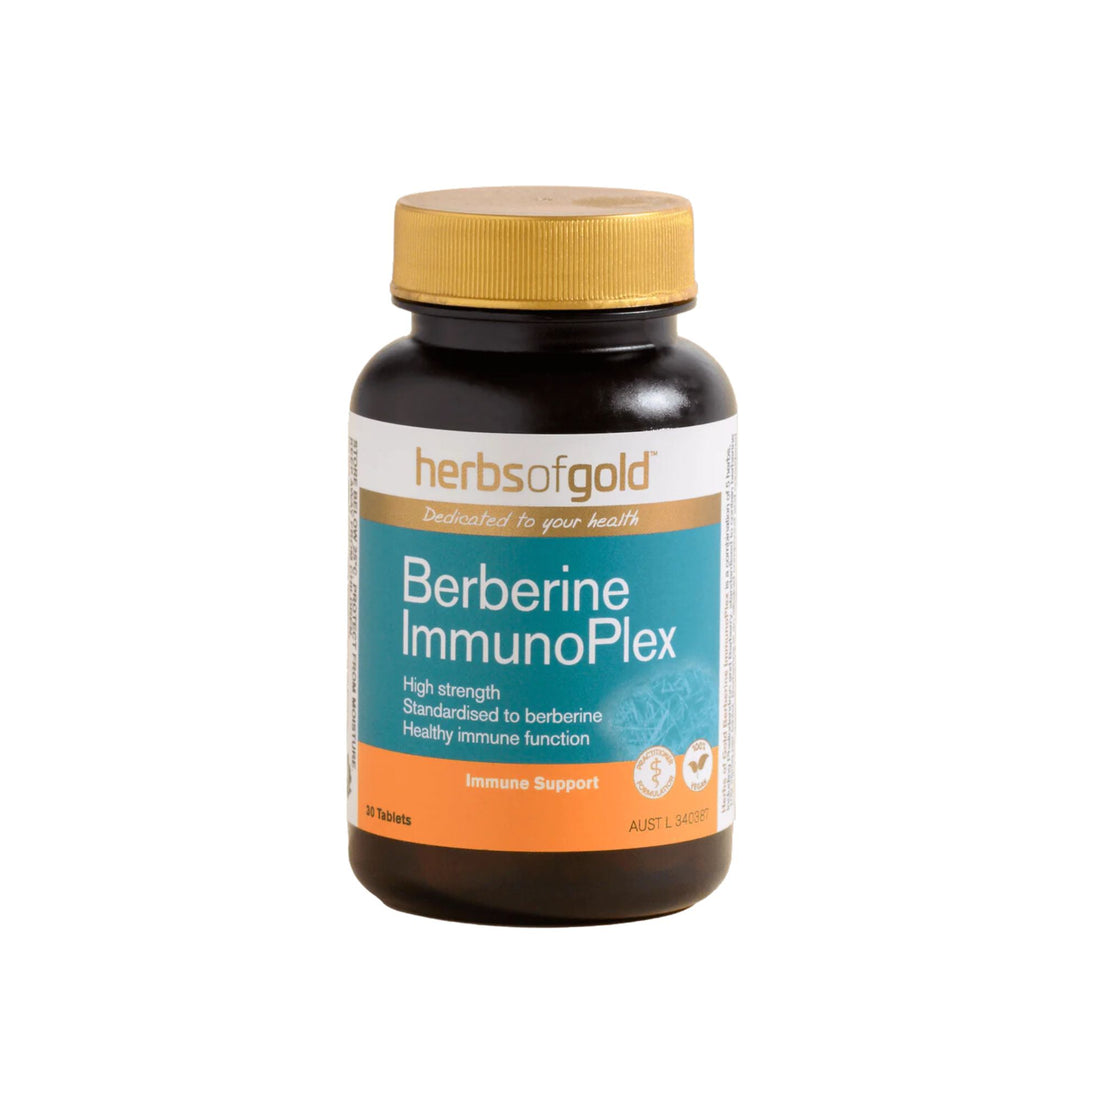 Herbs of Gold Berberine Immunoplex Vitamins and Health